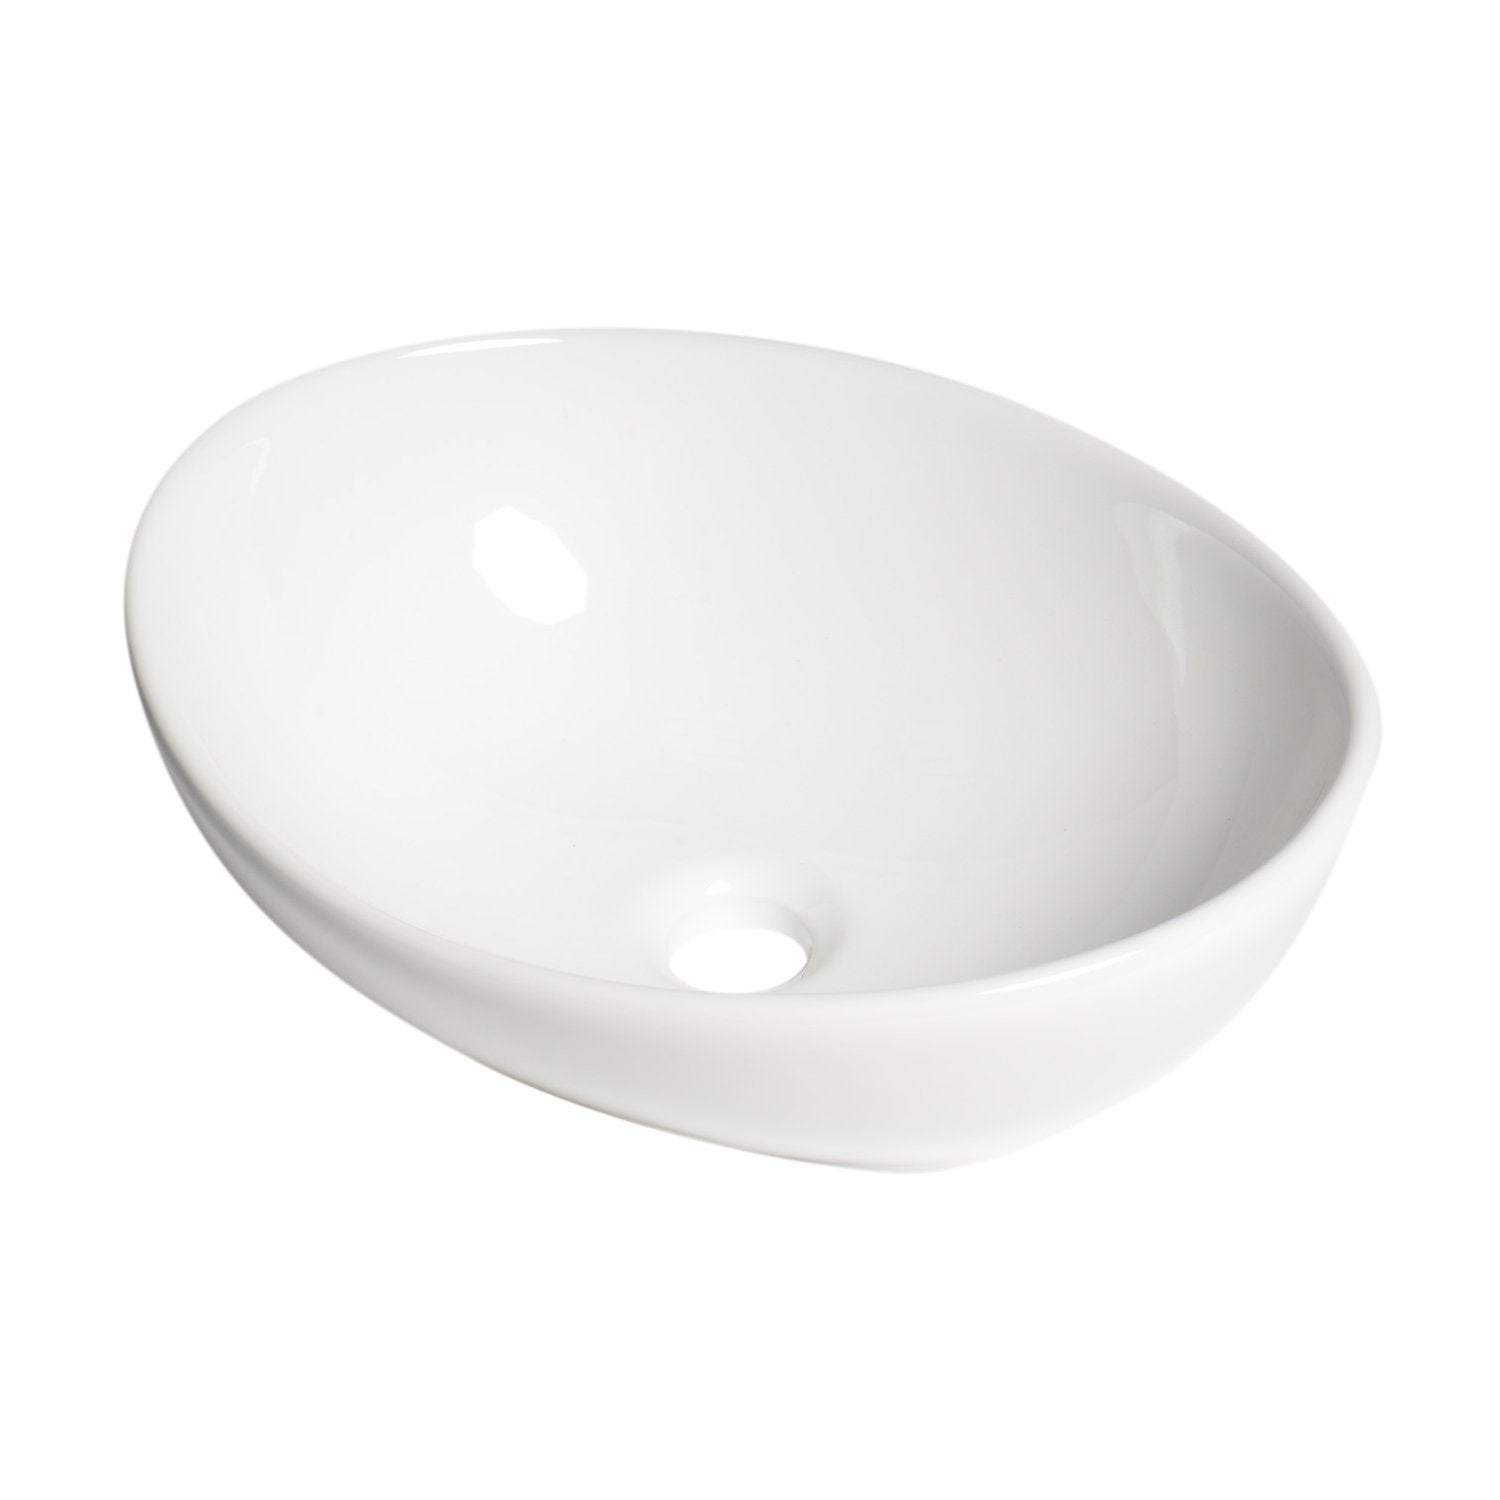 ALFI ABC913 White 16" Egg Shape Above Mount Ceramic Sink